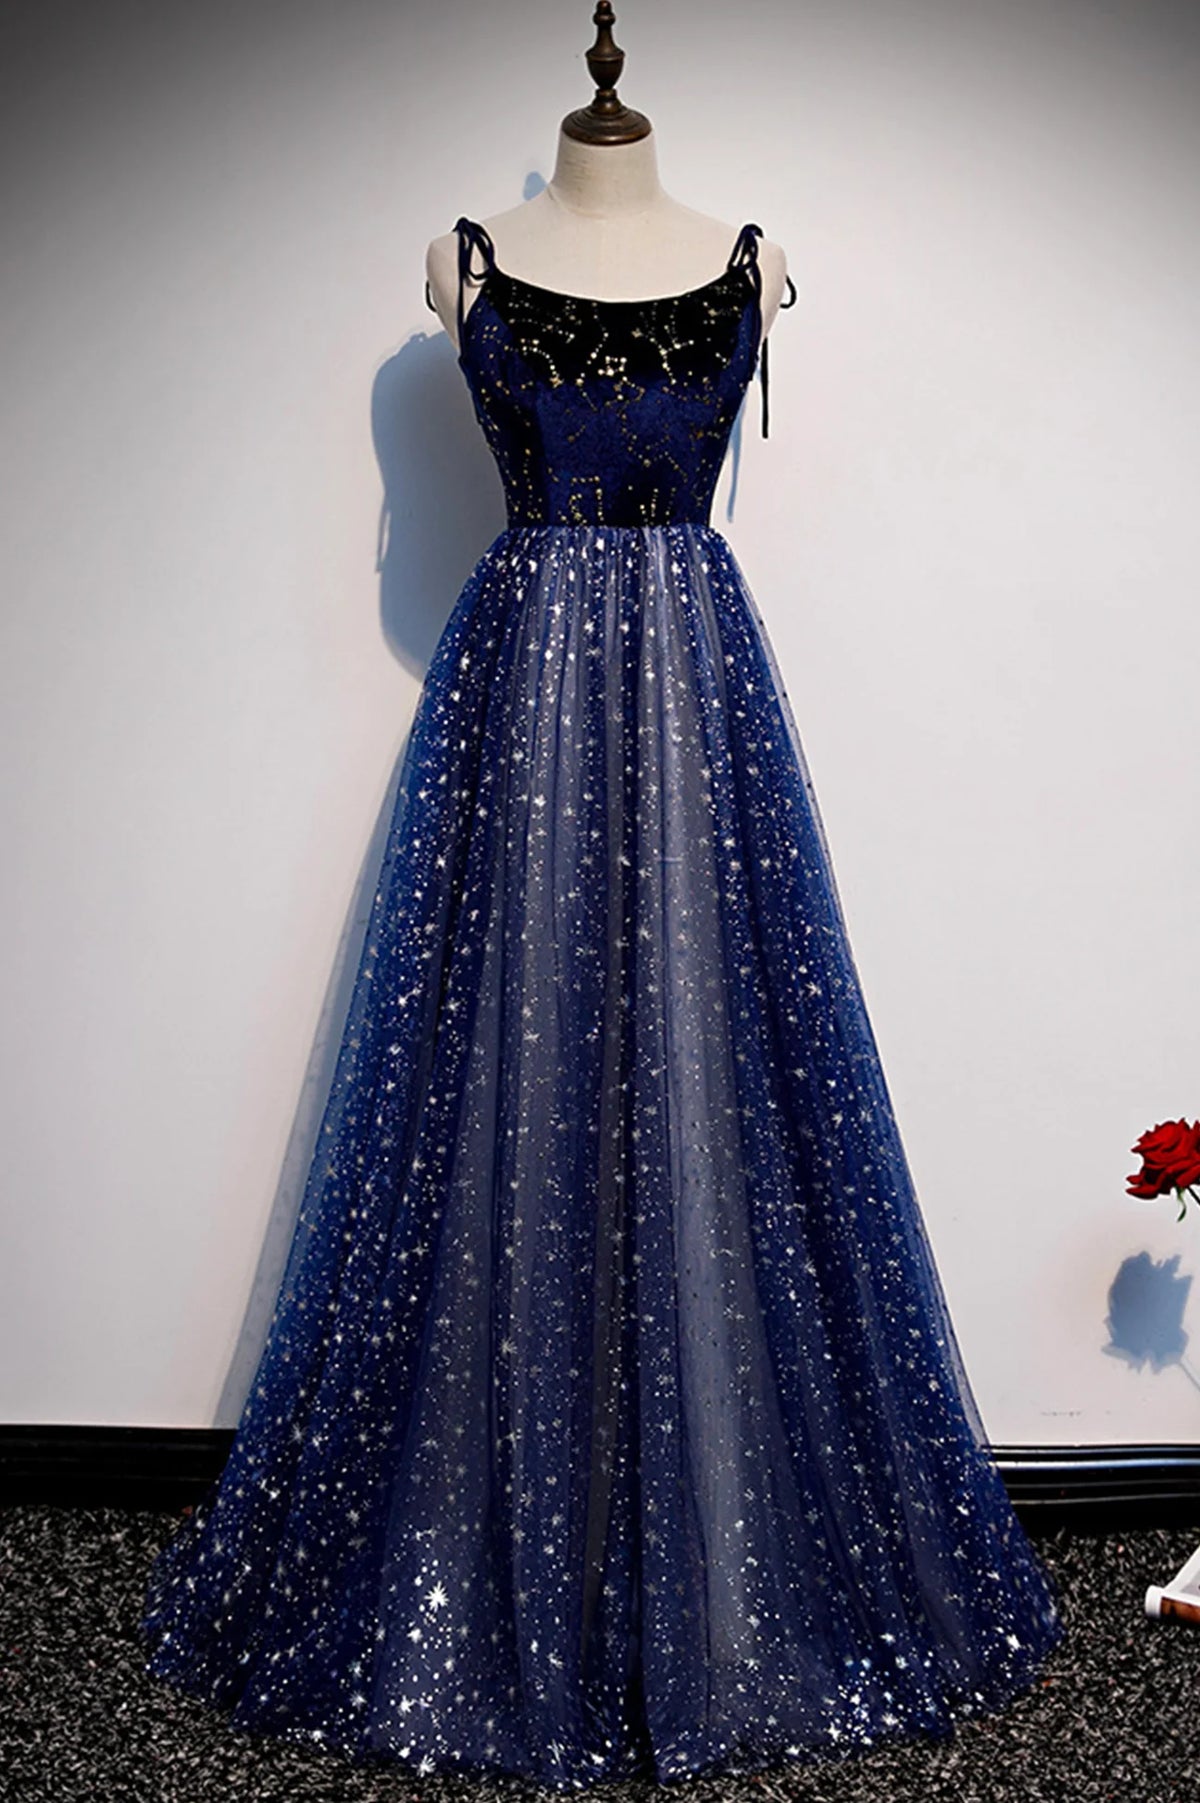 Blue Velvet Tulle Long Prom Dress, Beautiful A-Line Evening Party Dress